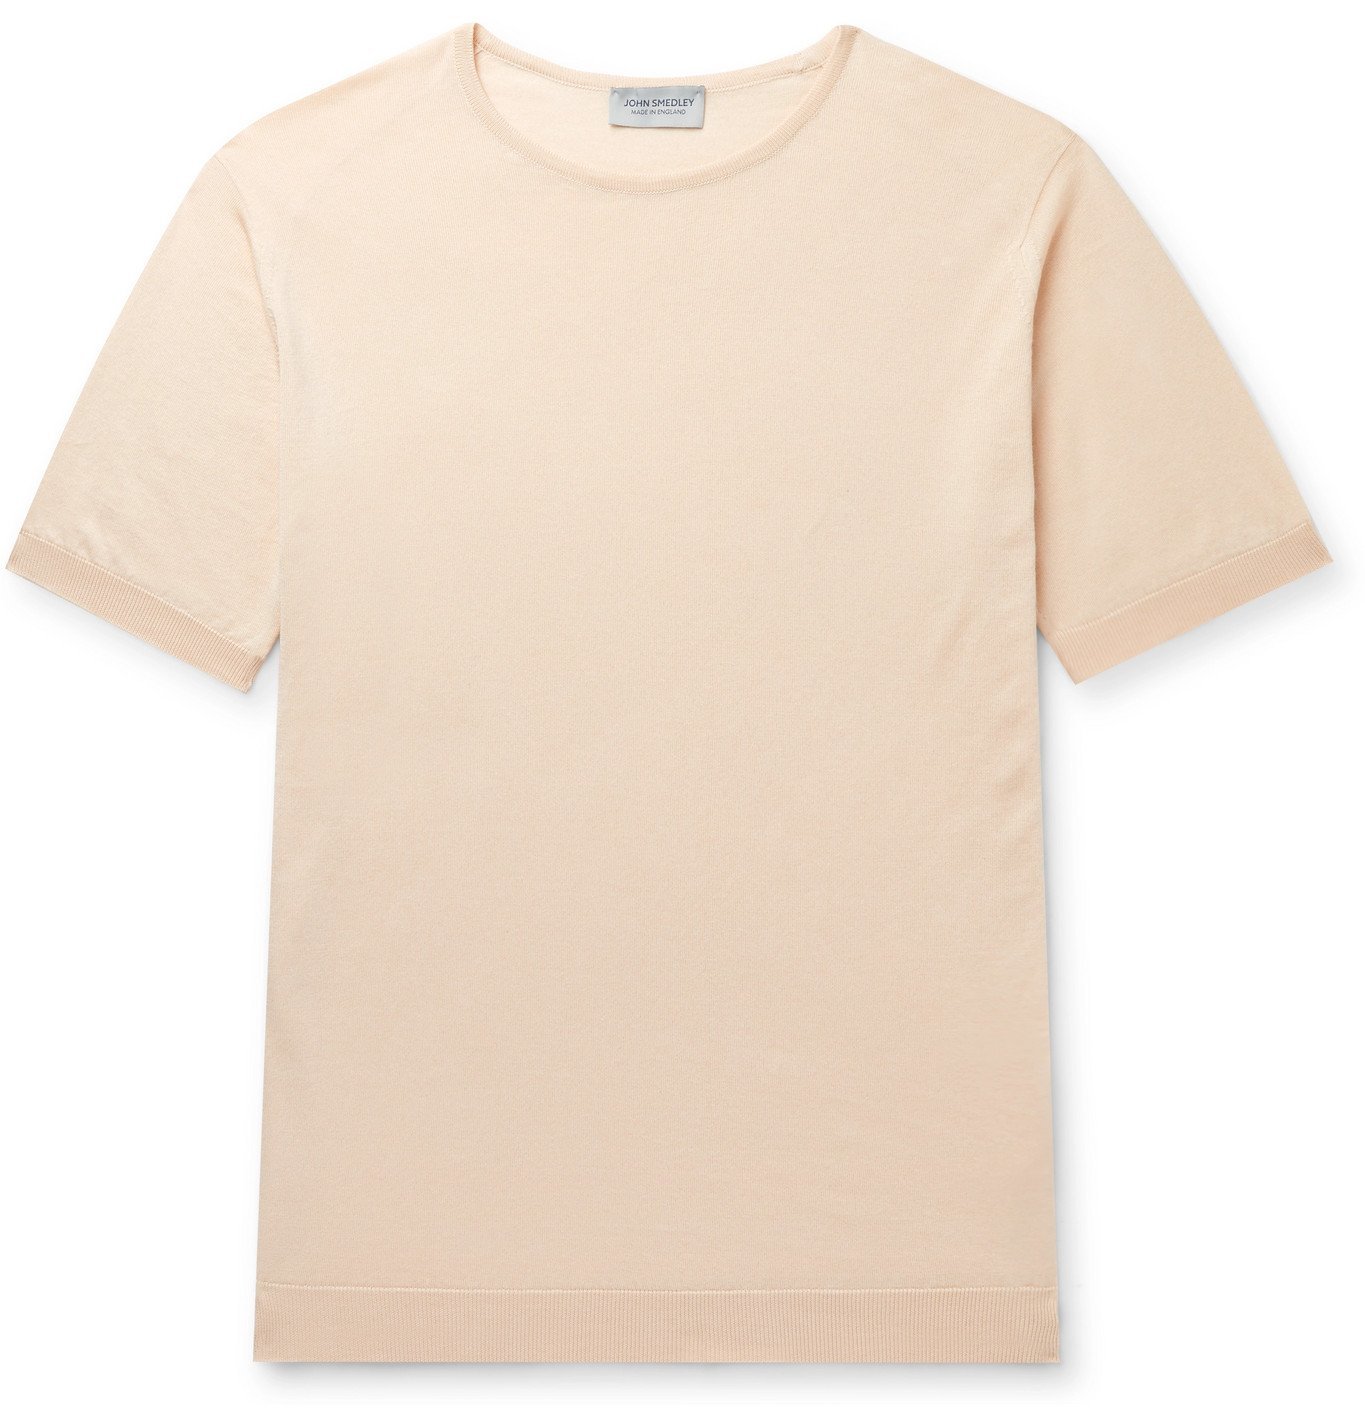 JOHN SMEDLEY Mens BELDEN Sea Island Cotton T Shirt BNWT RRP £120 